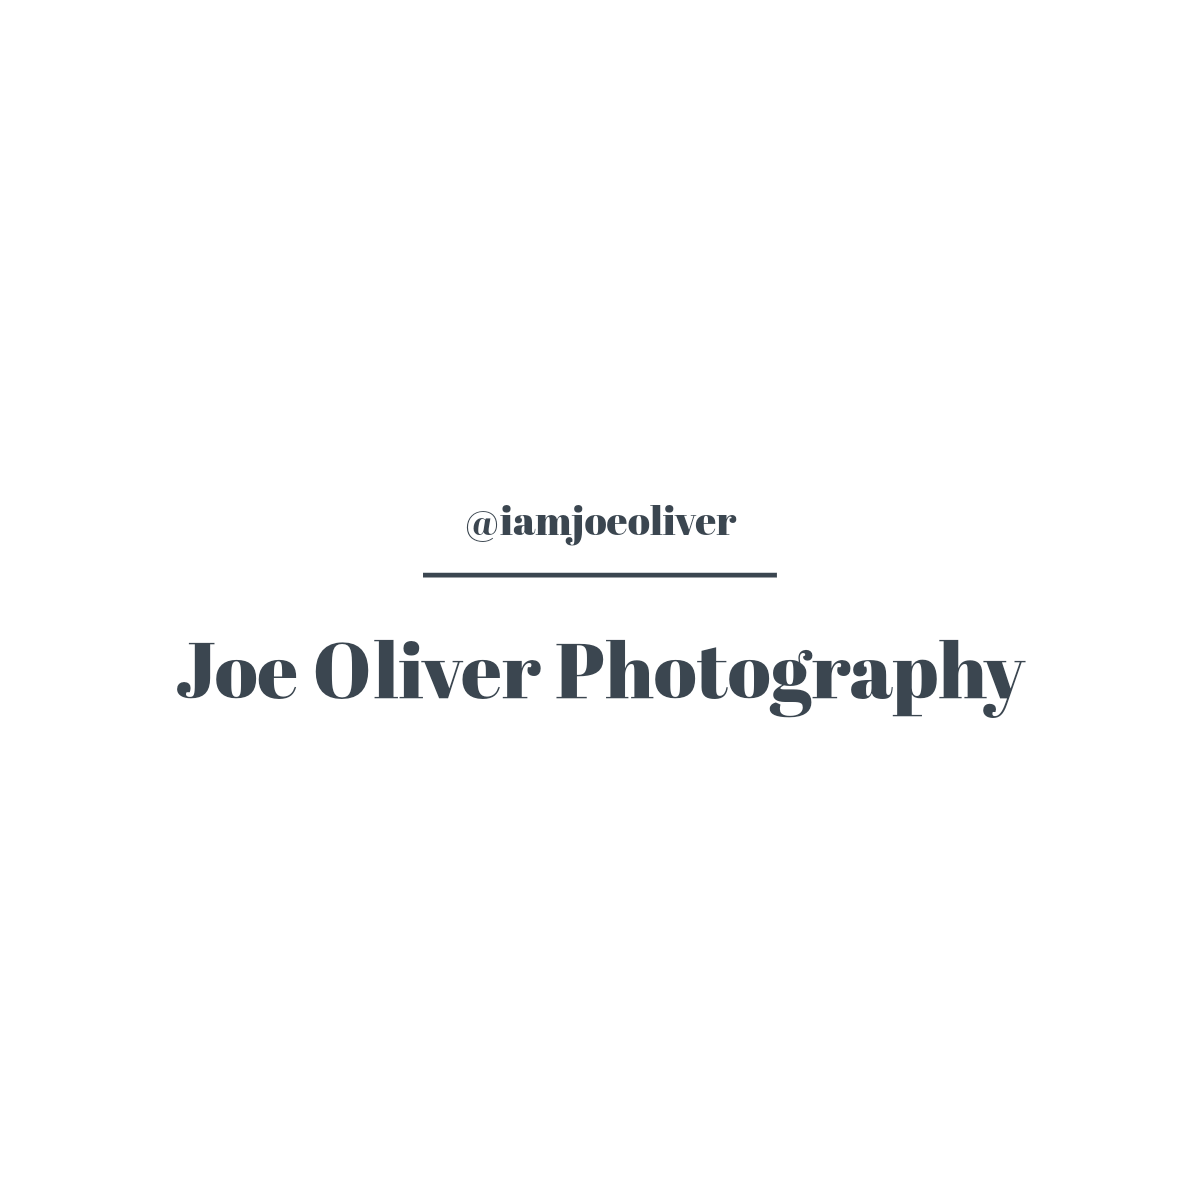 Joe Oliver Photography